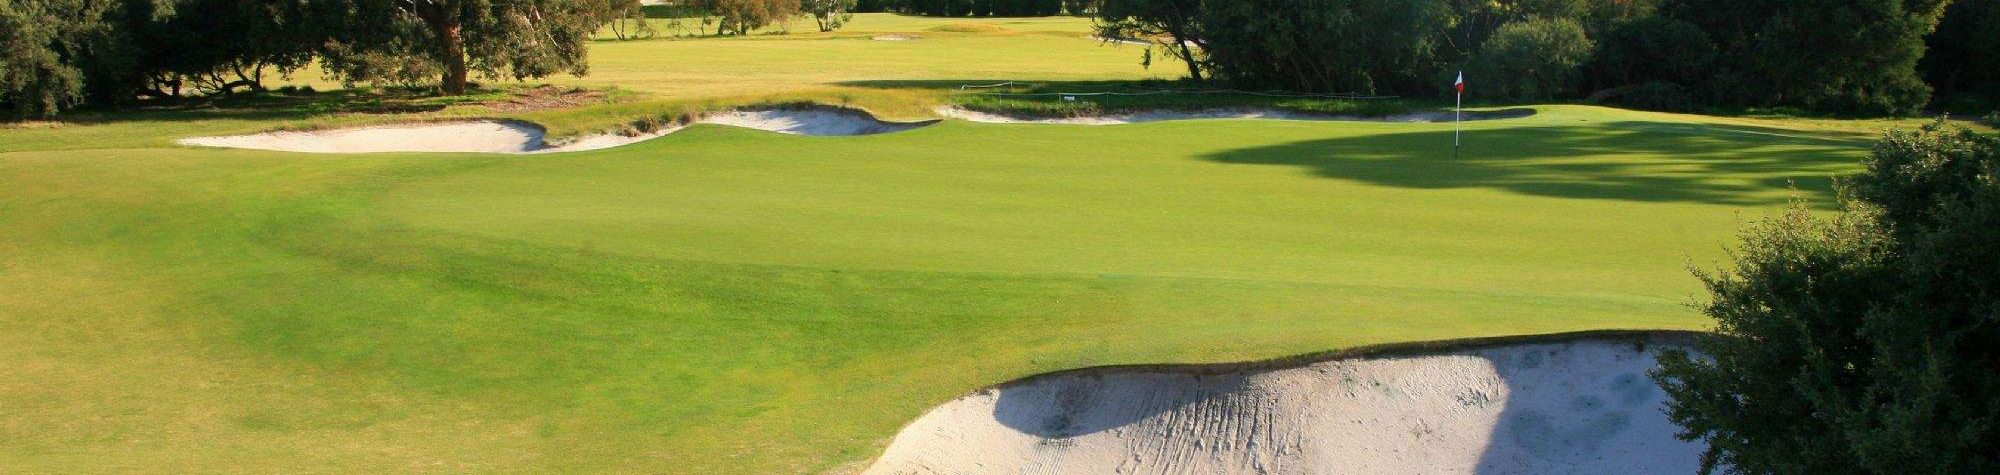 Royal Melbourne Golf Club East Course